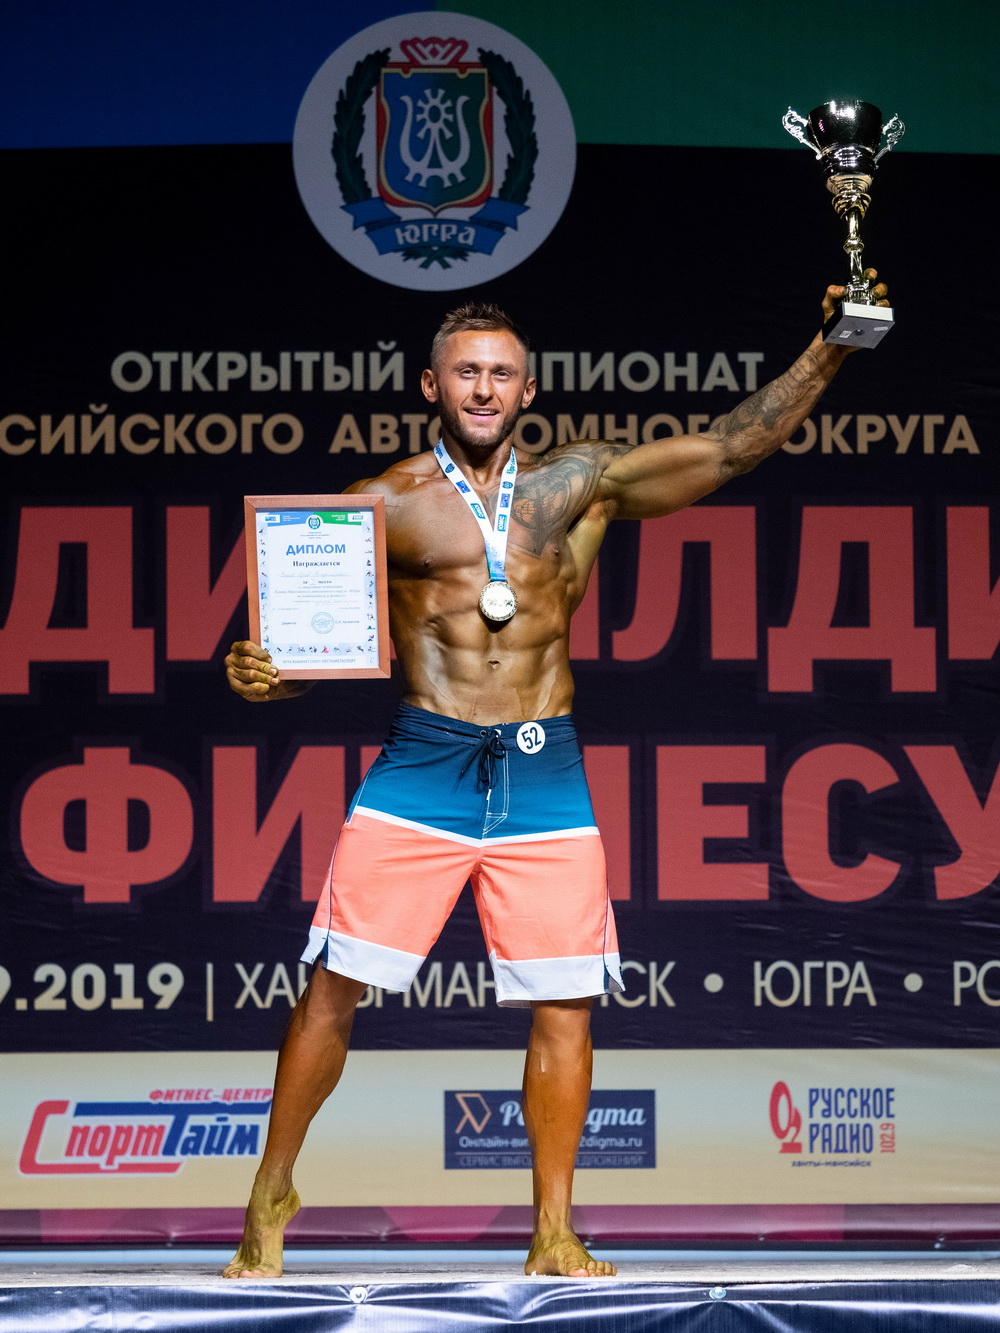 Чемпионат Ханты-Мансийского автономного округа –  Югры - 2019